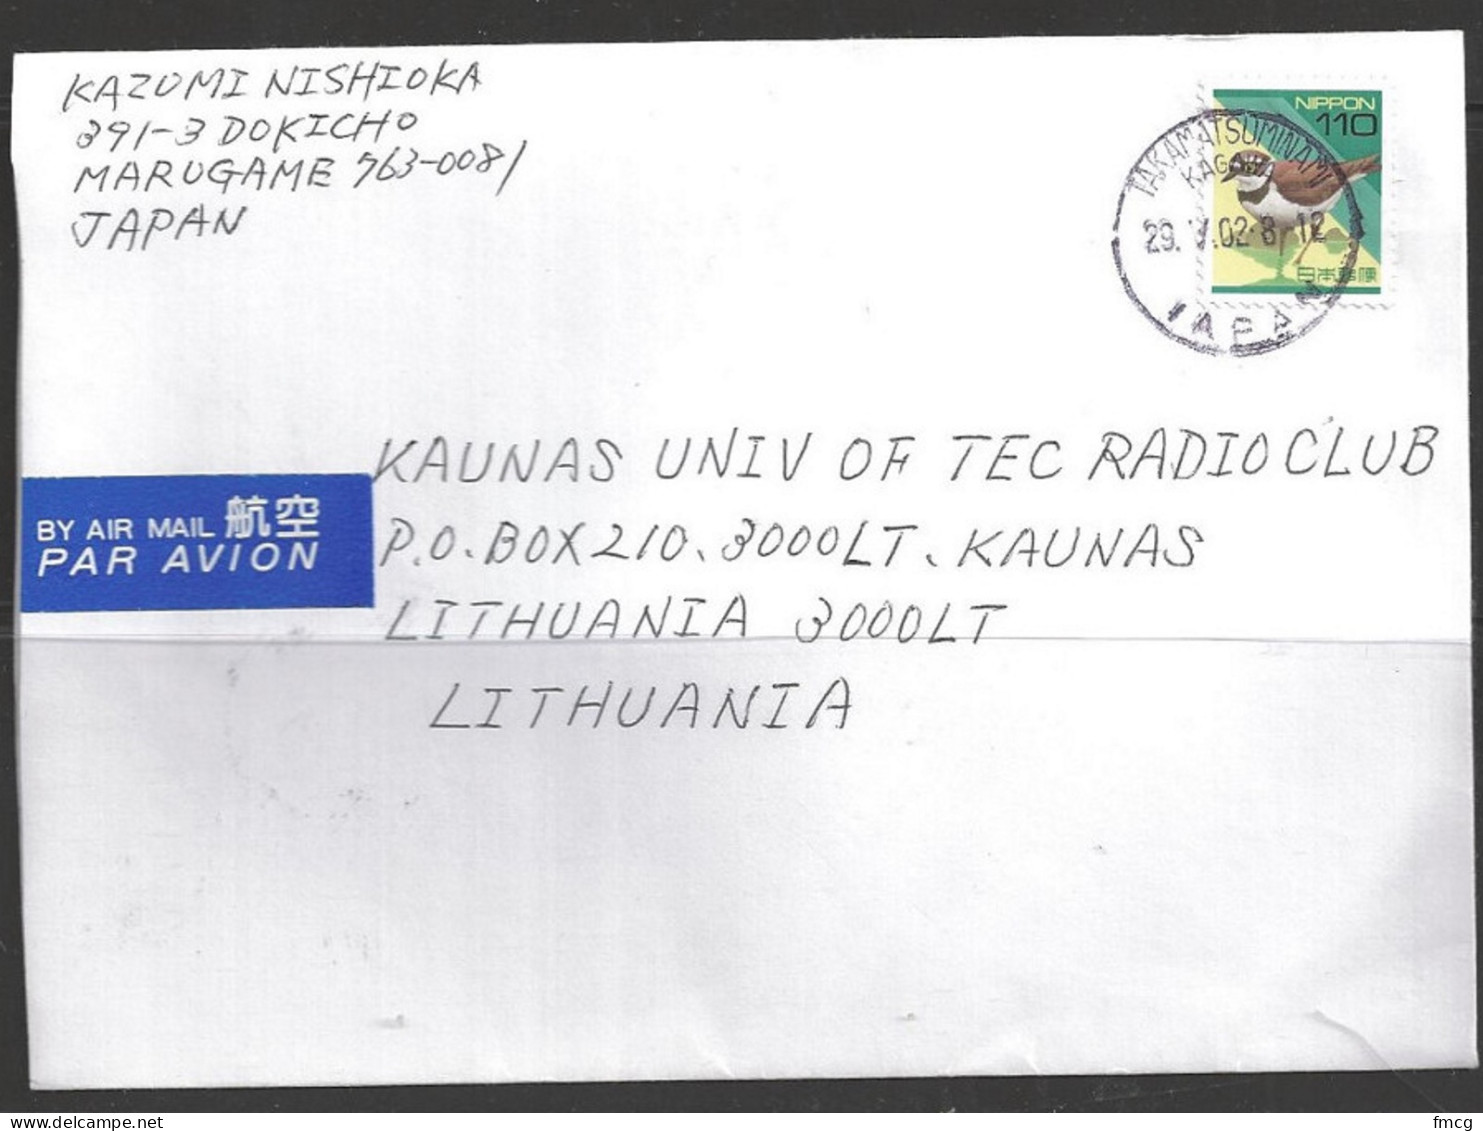 2002 Takamatsuminami (29.V.02) To Kaunas, Lithuania - Lettres & Documents